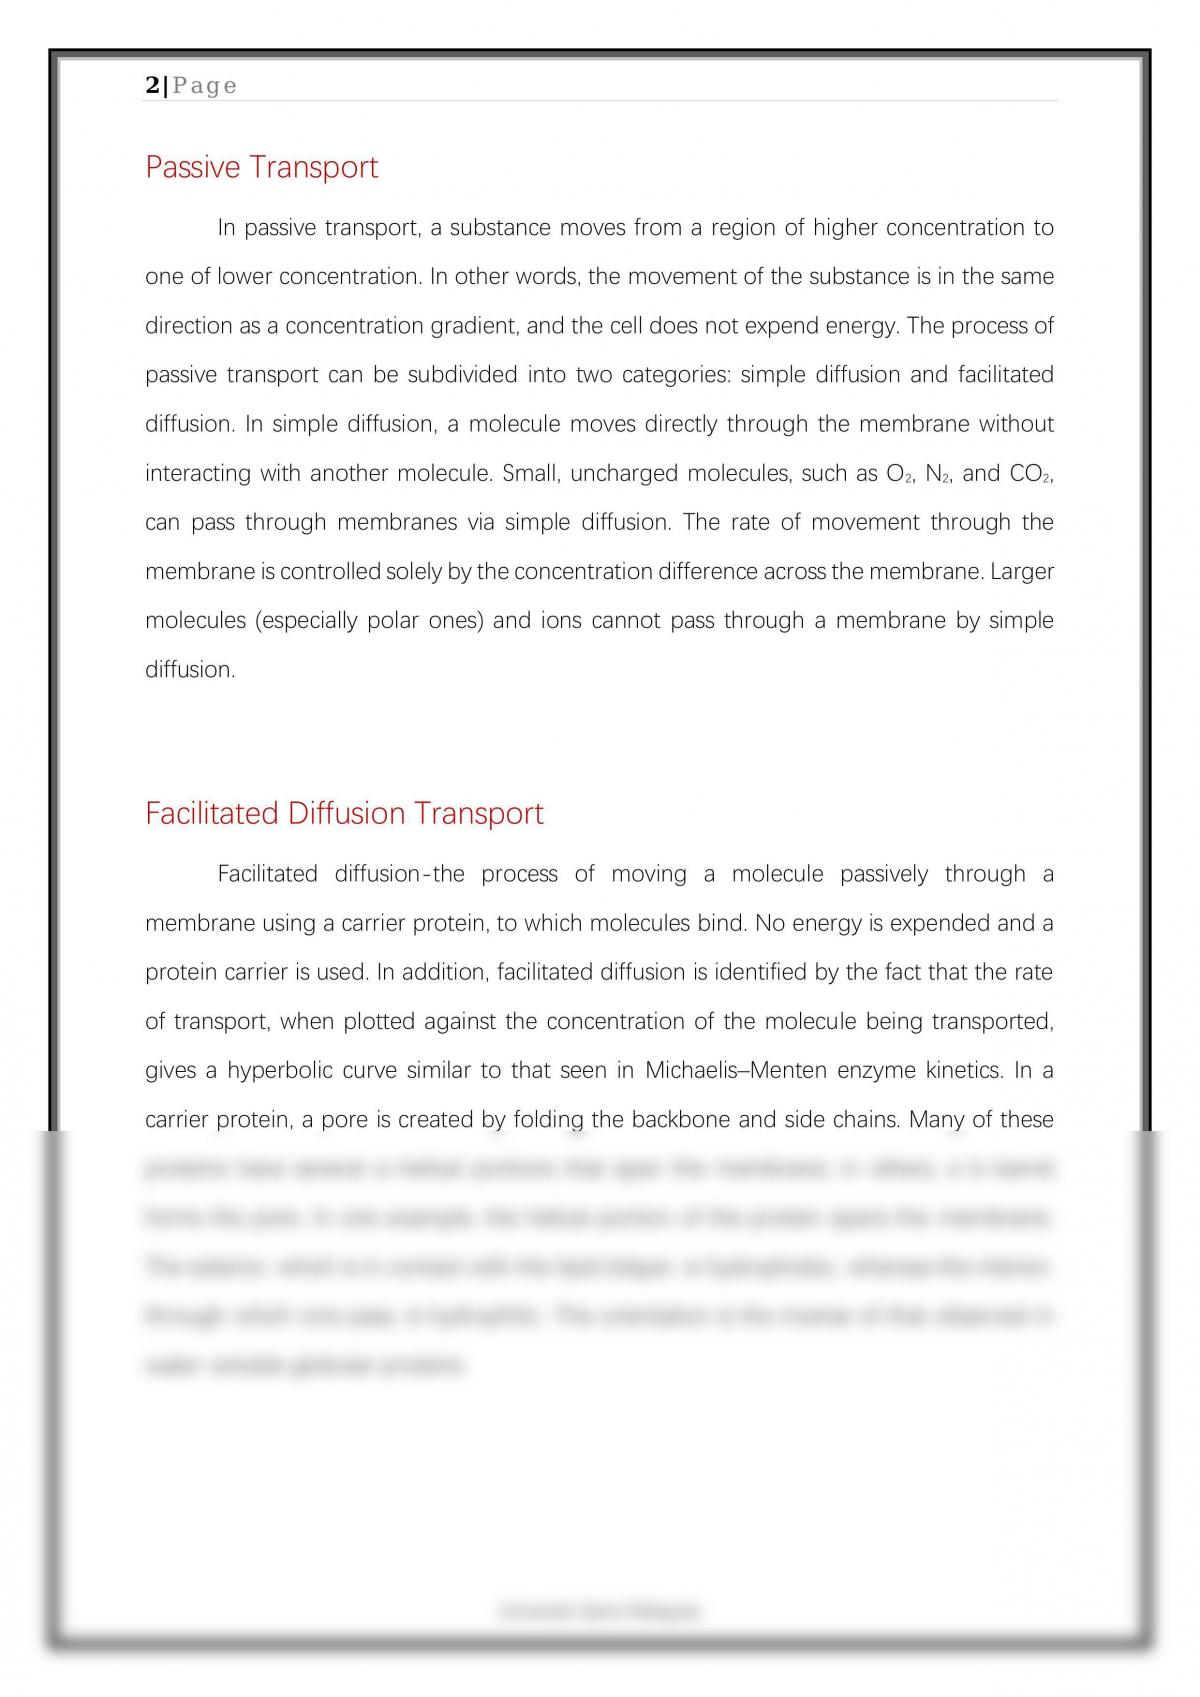 Transportation Through Membrane - Page 2